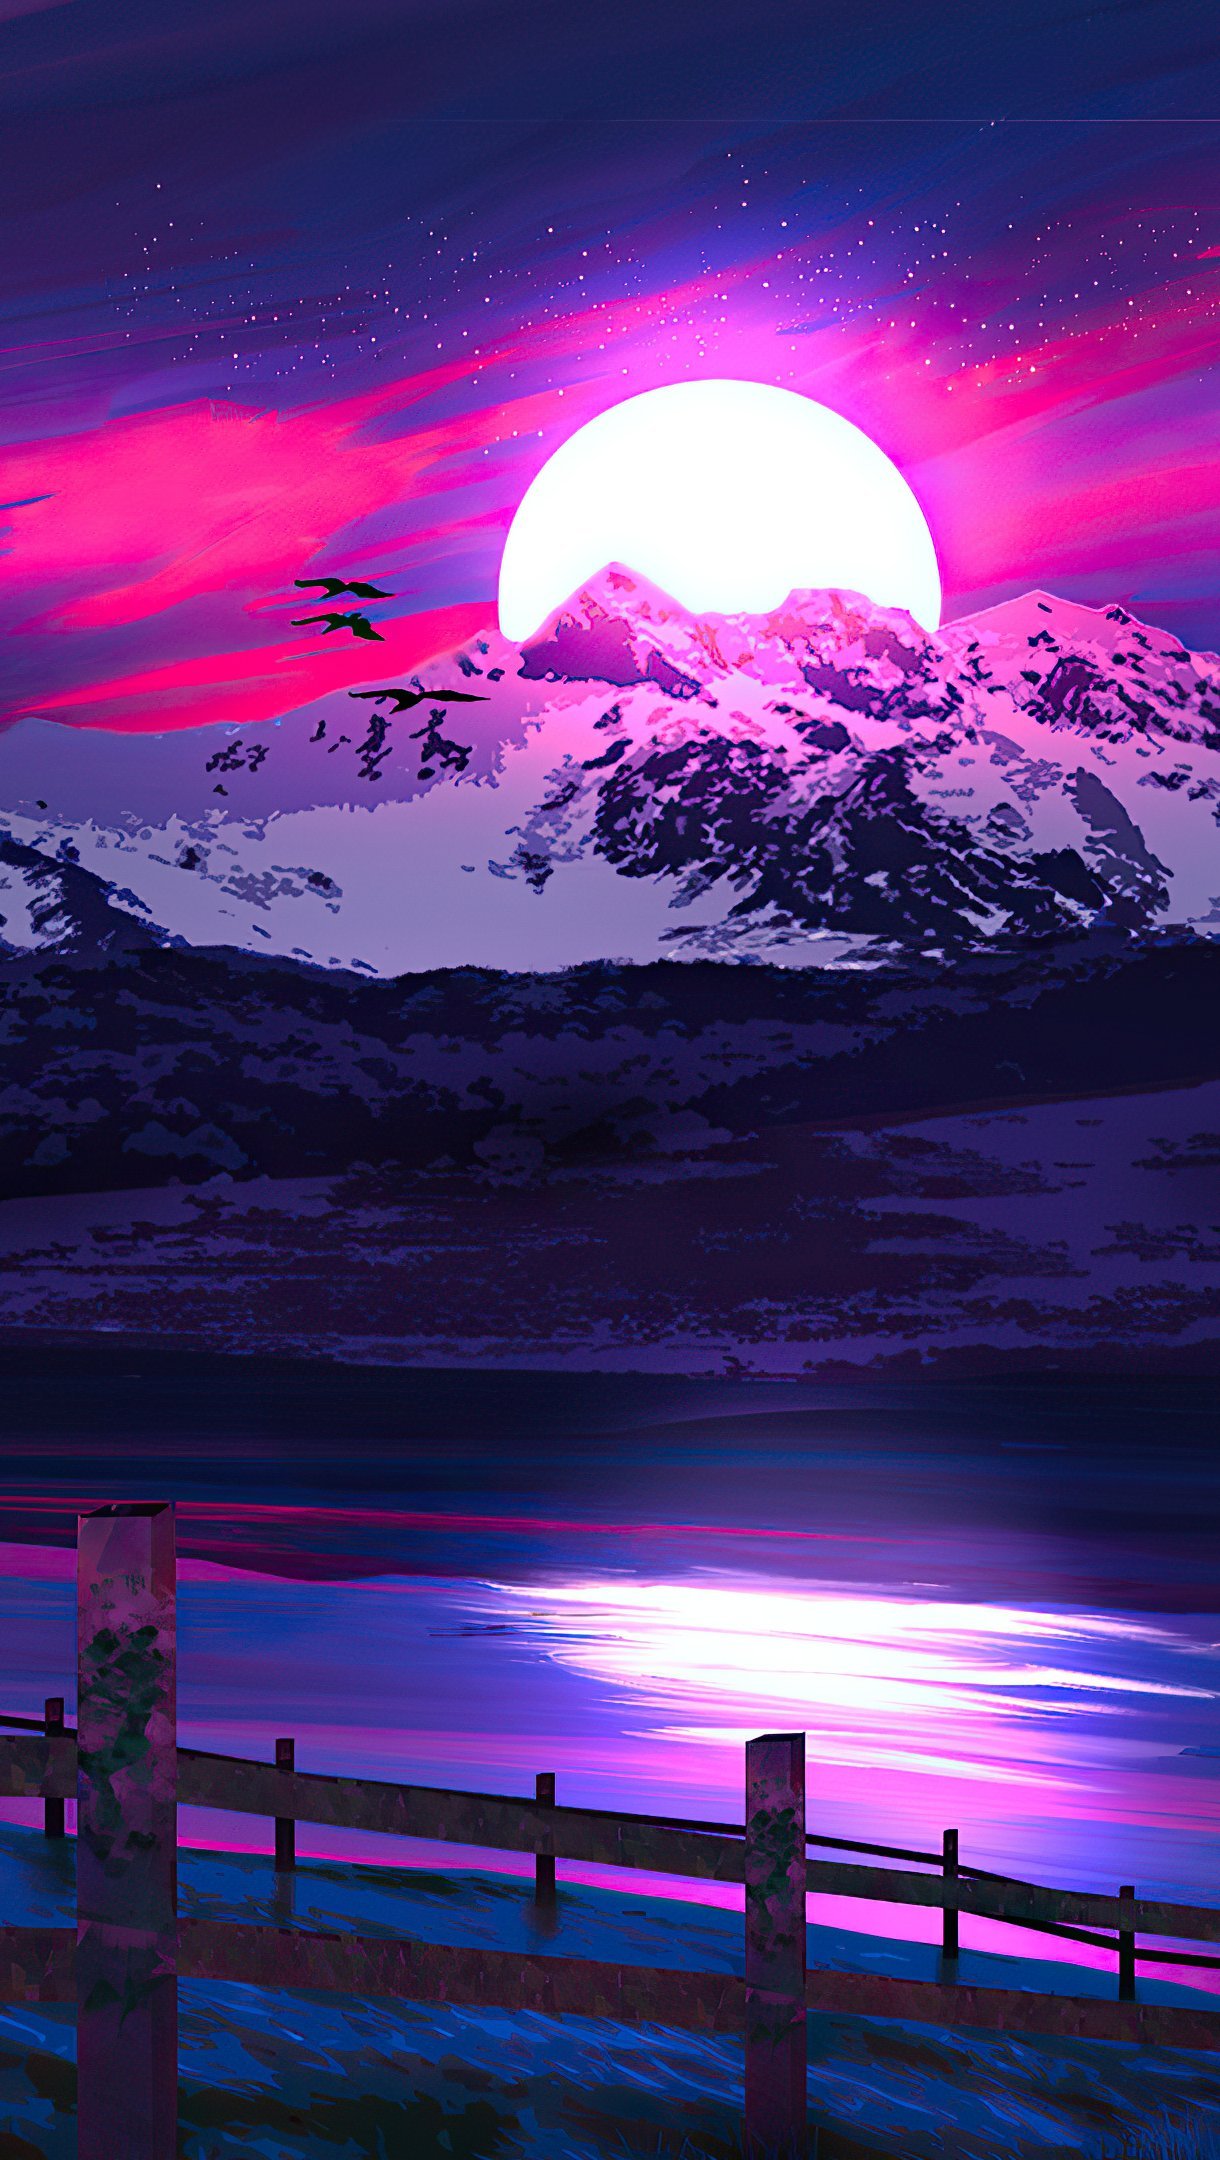 Digital Landscape at sunset Wallpaper 4k Ultra HD ID:5846